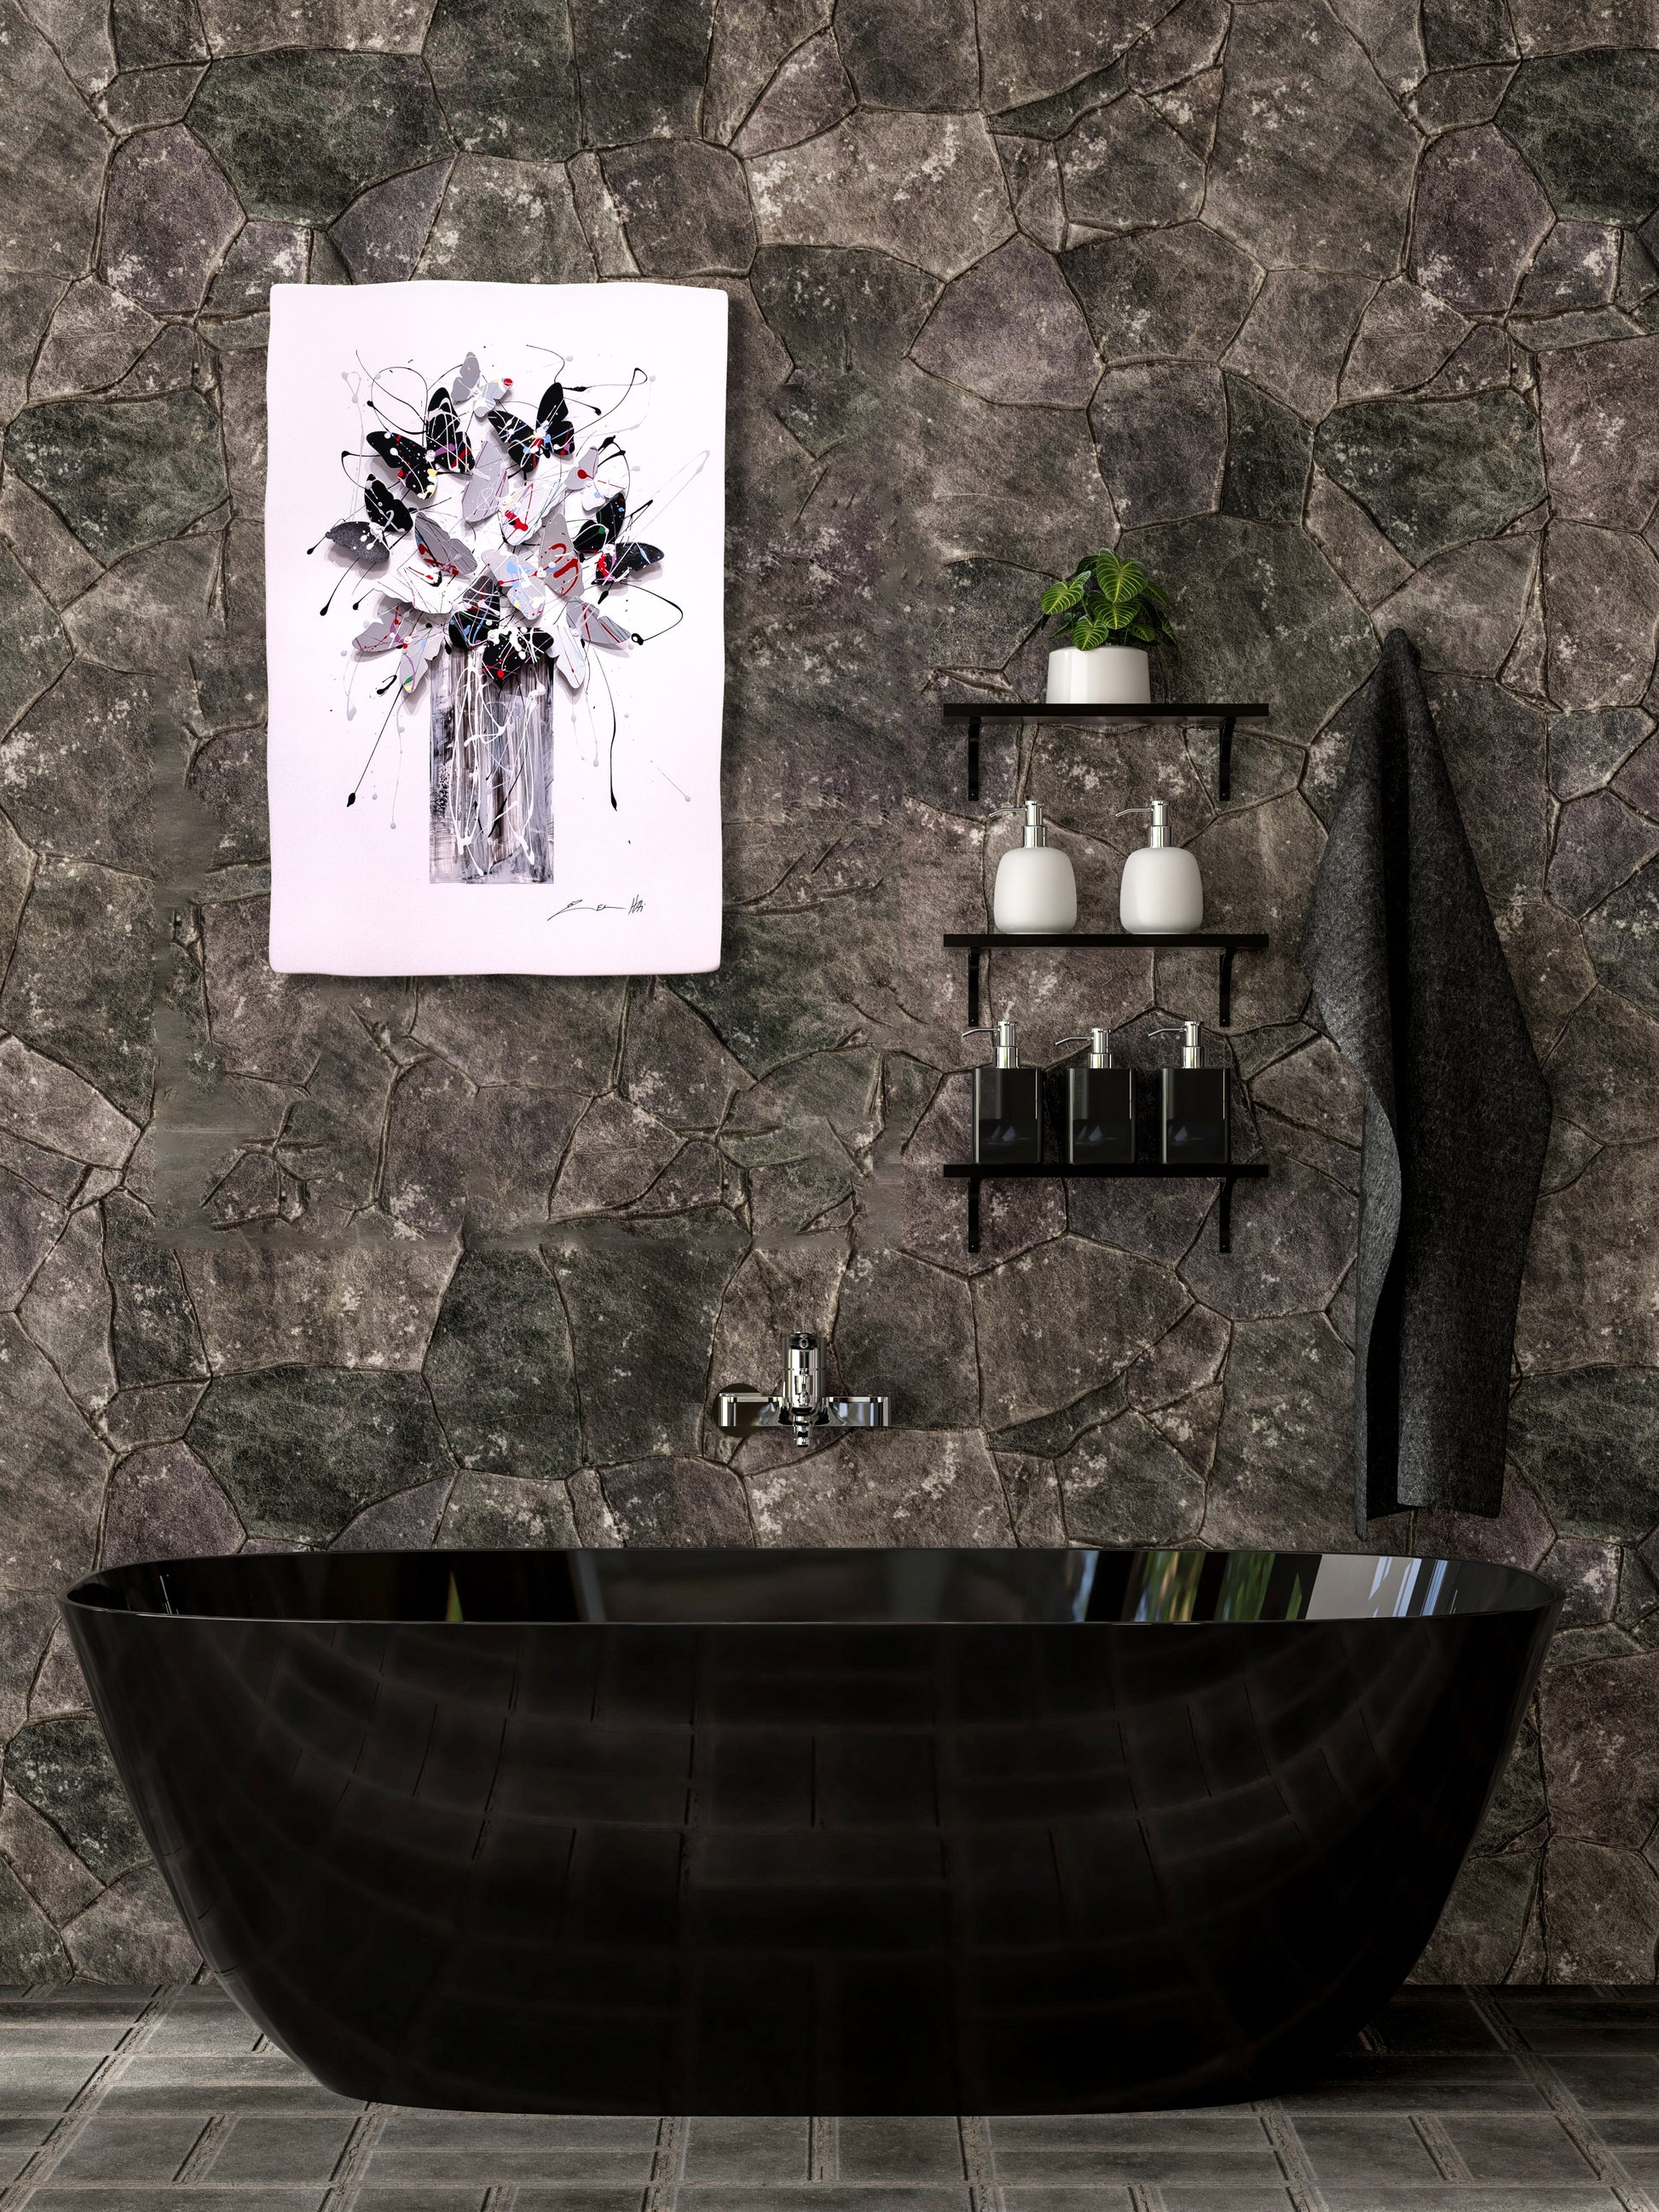 Black & White Tree of Life hanged above bathtub